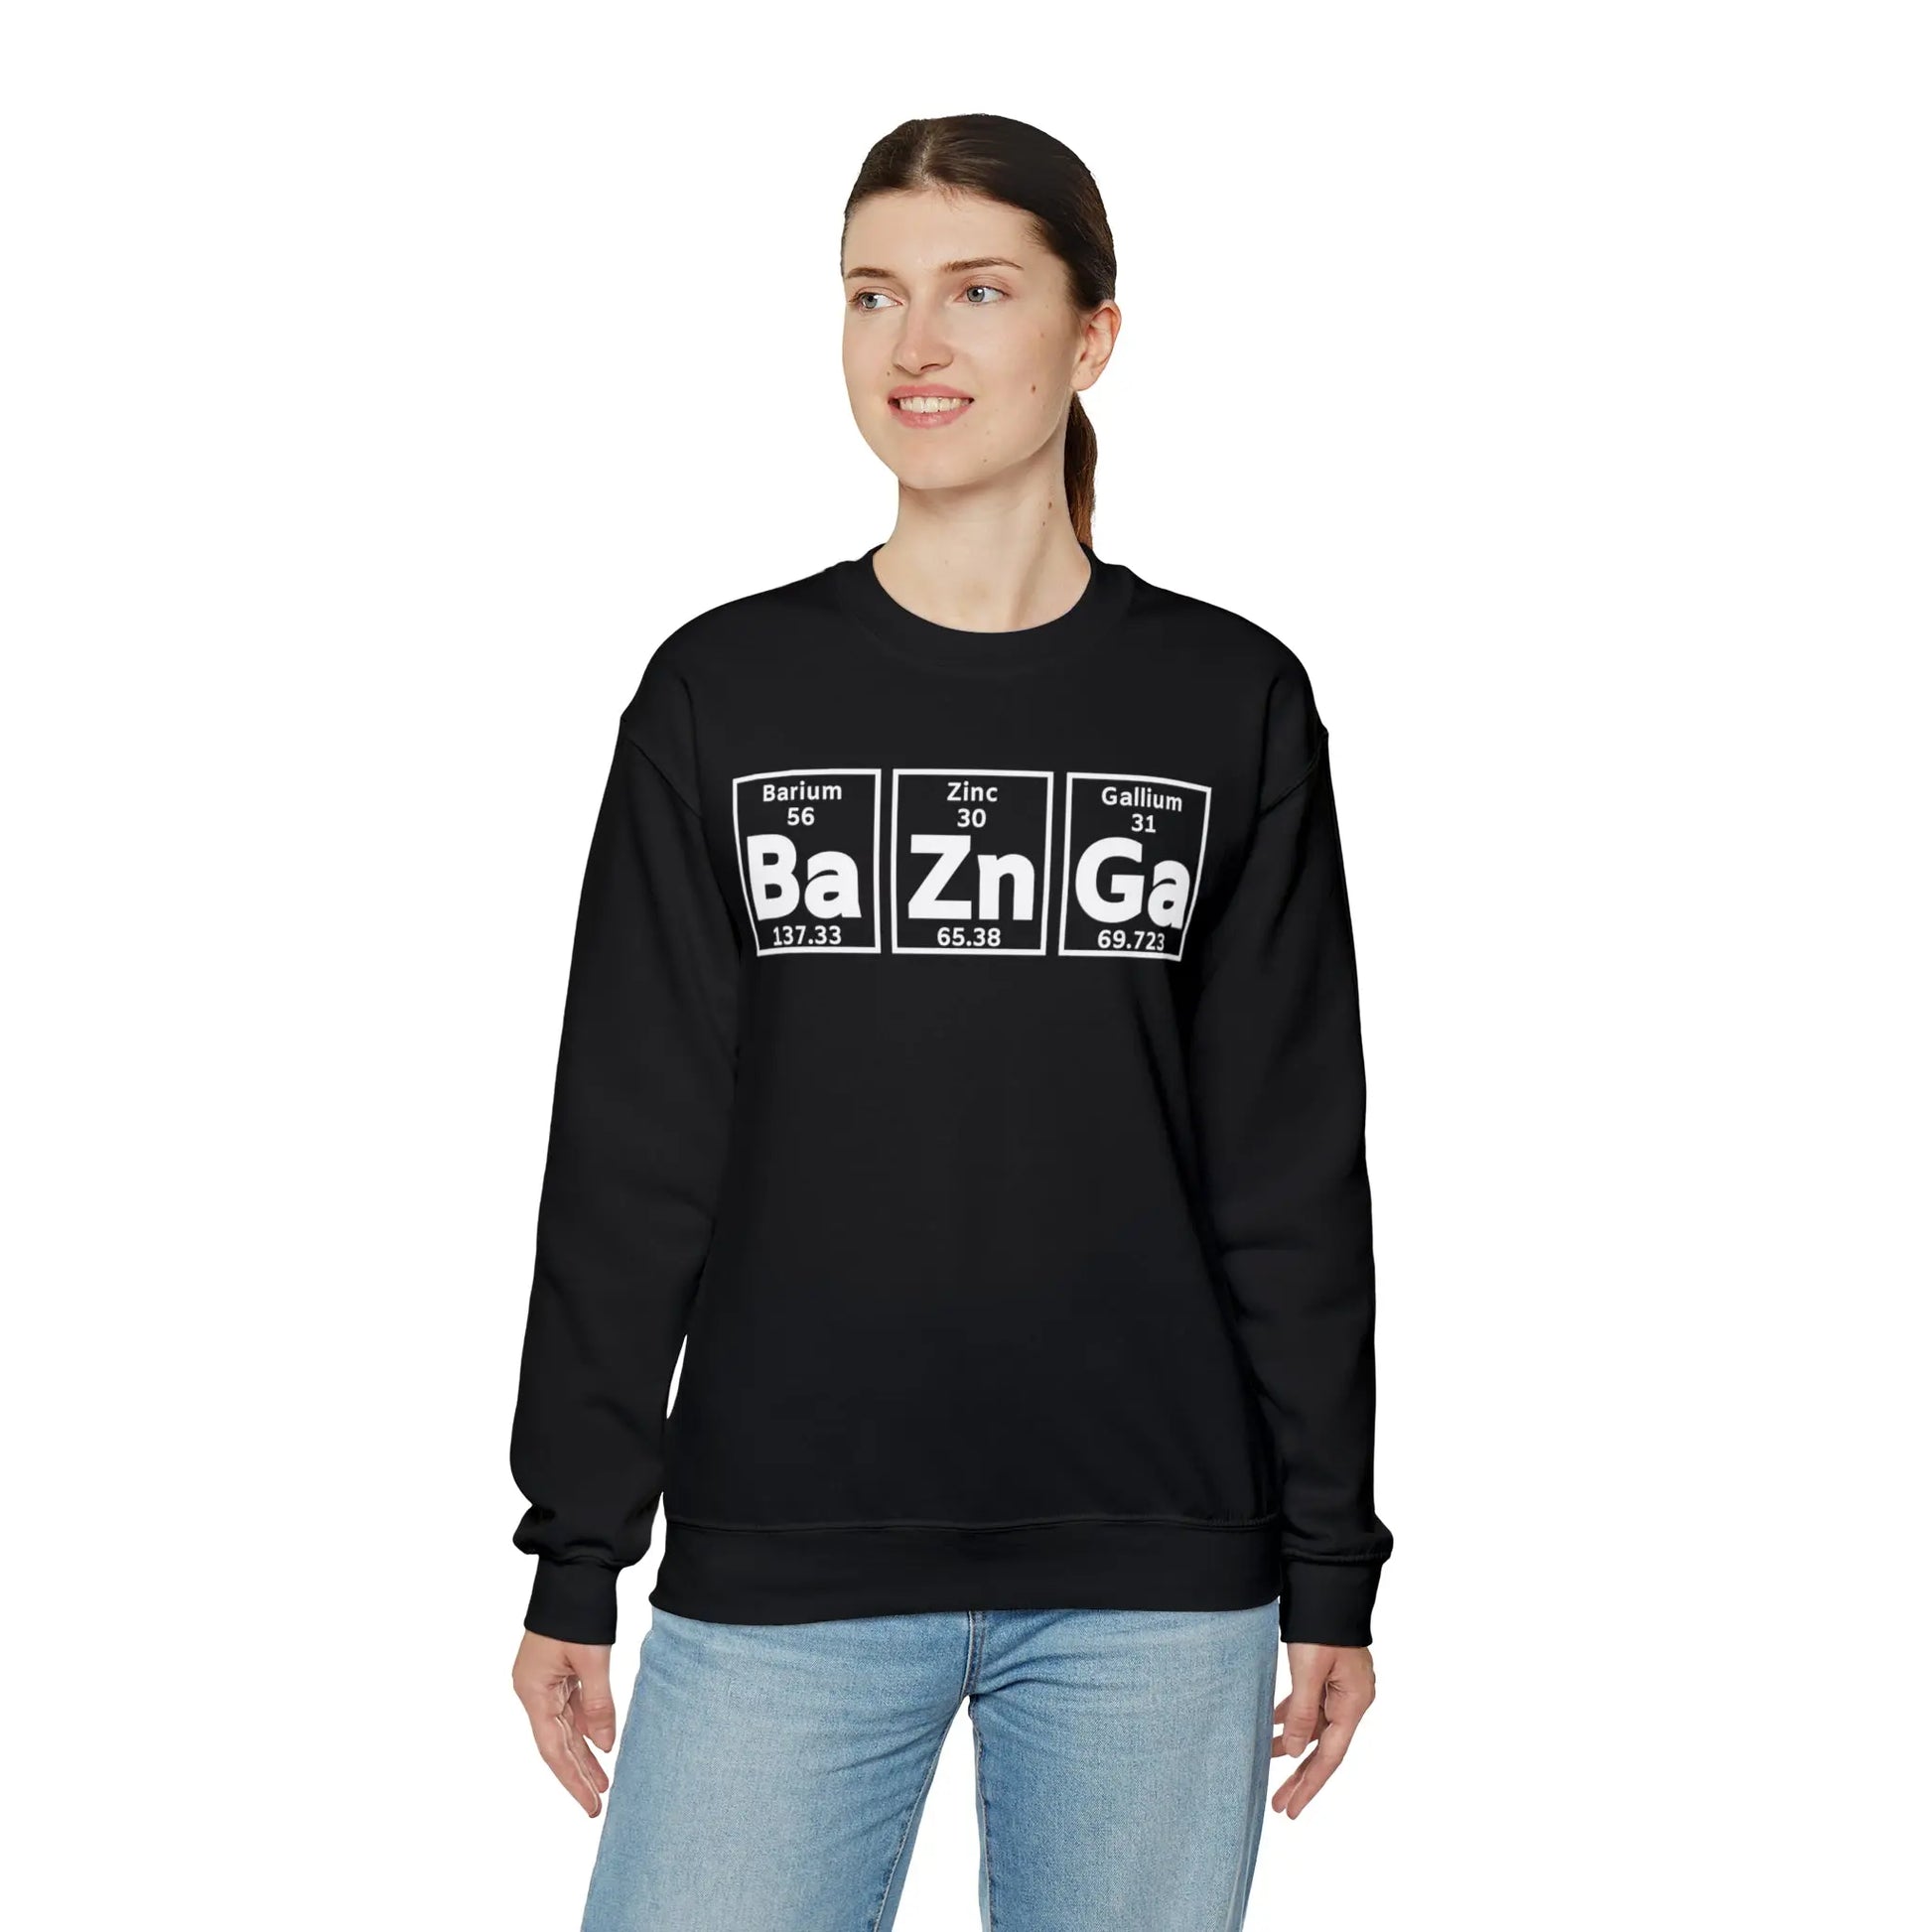 Geek Chic Big Bang Theory Sweatshirt - 'Ba Zn Ga' Periodic Table Printify